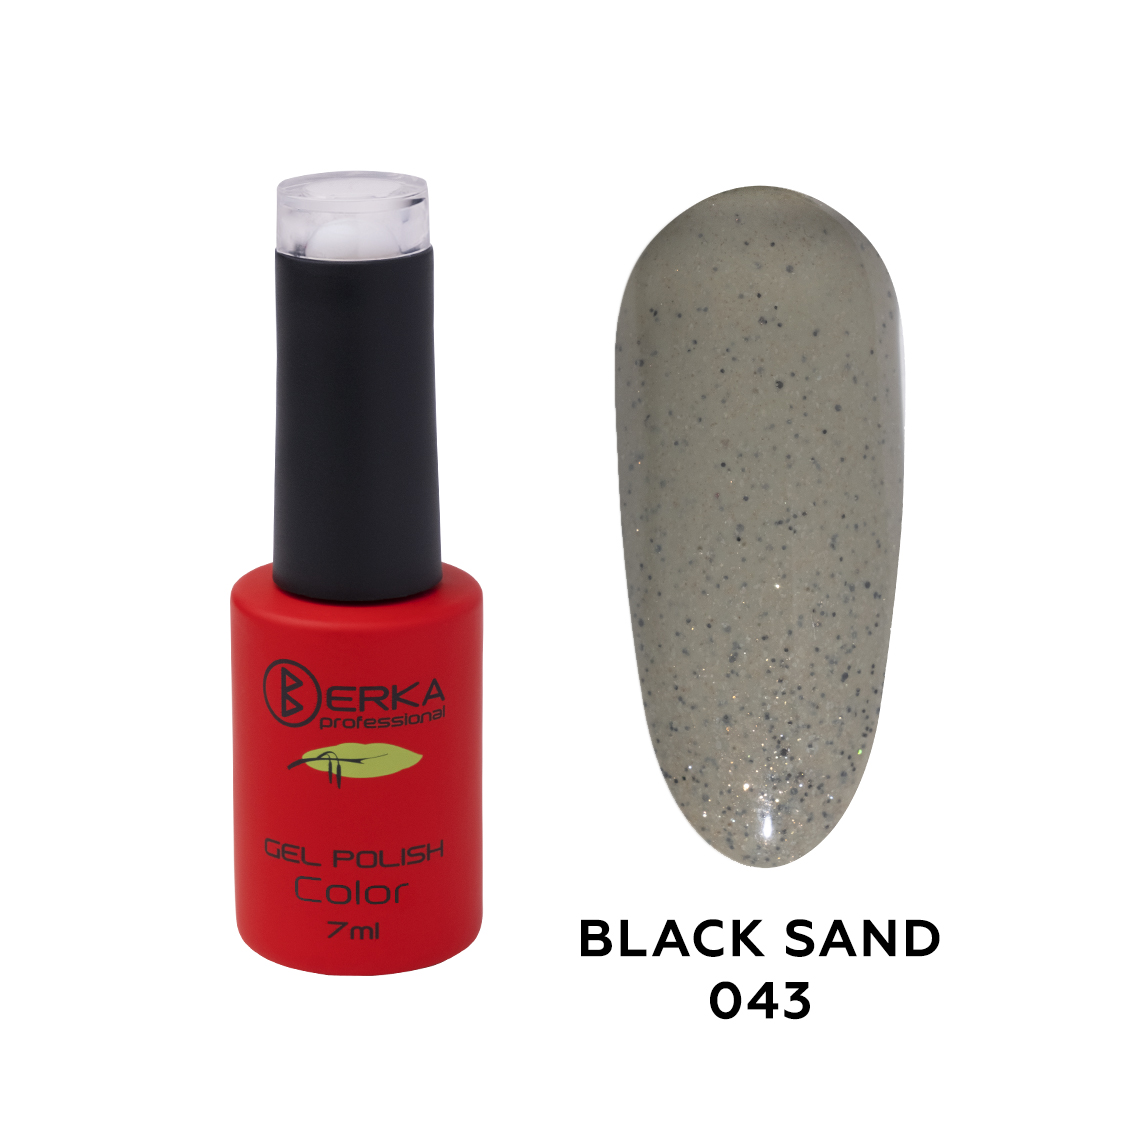 Гель-лак Black Sand №043 7мл Berka